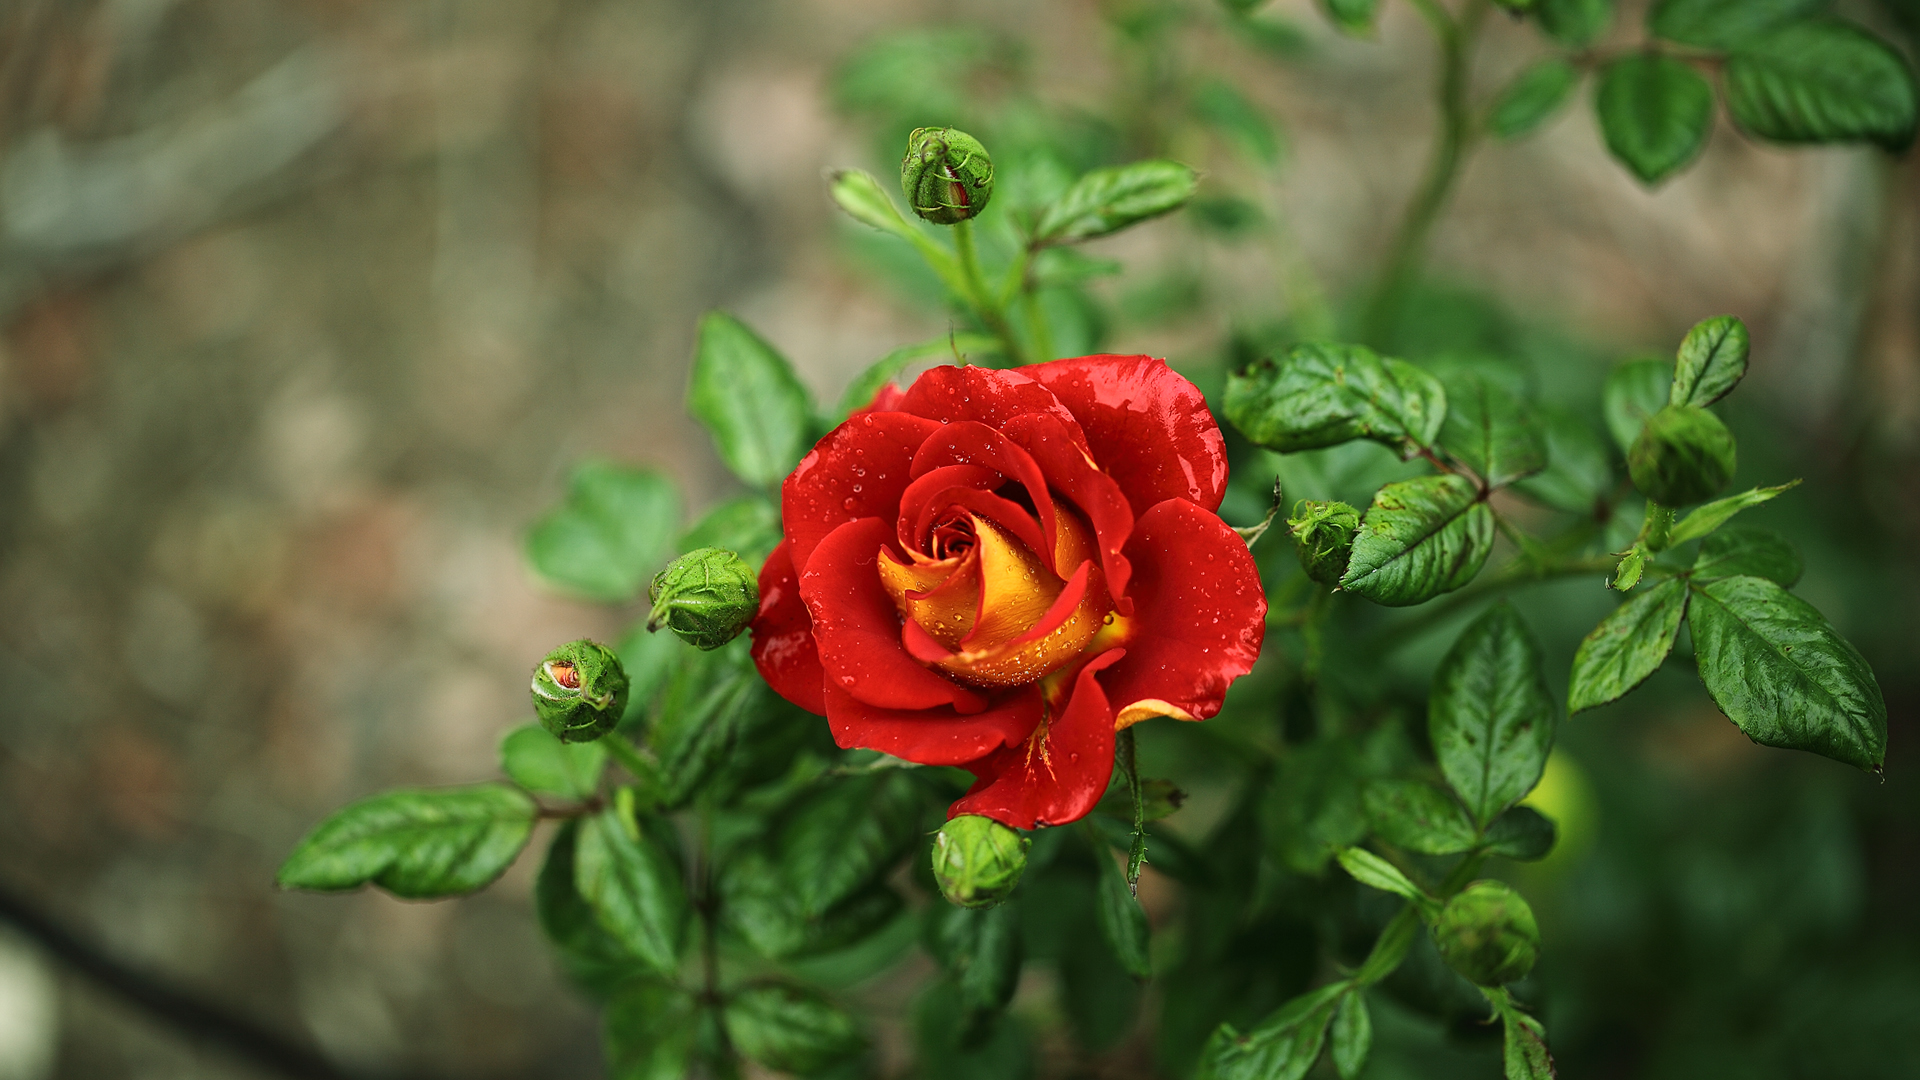 Fire rose